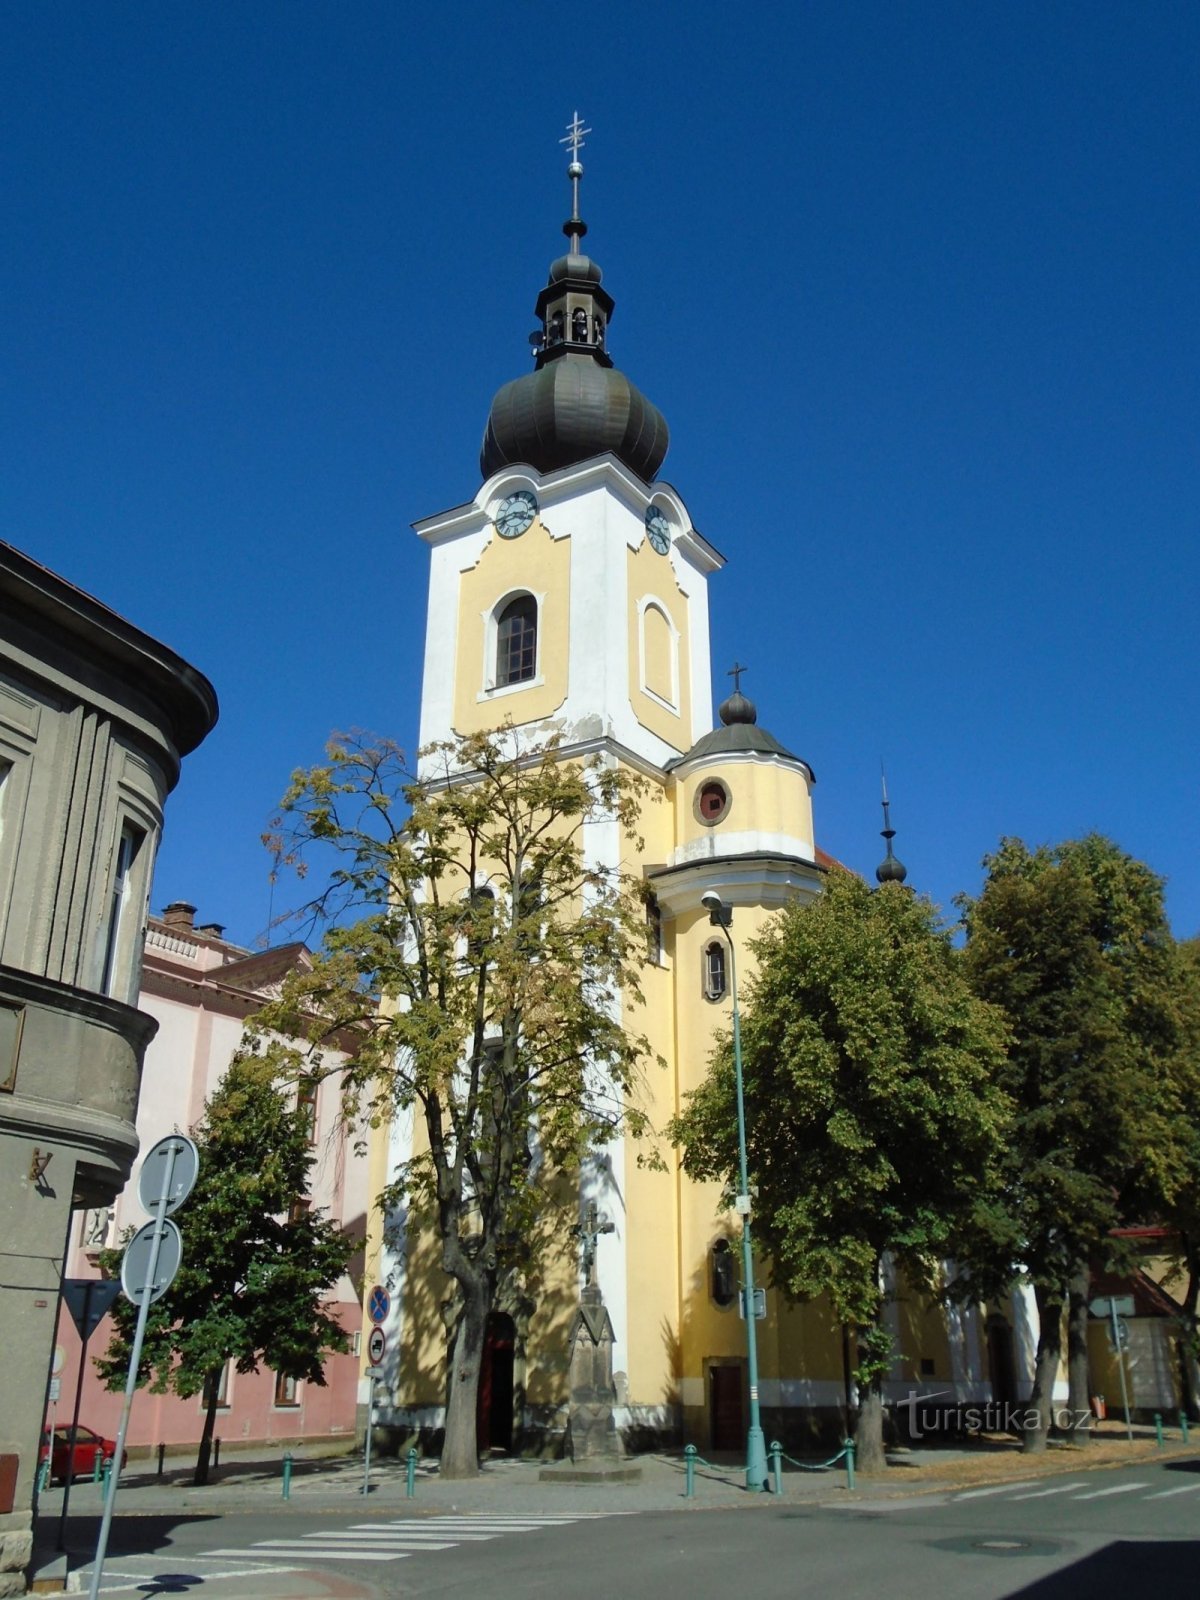 Nhà thờ St. Ondřeje (Třebechovice pod Orebem, ngày 6.8.2018 tháng XNUMX năm XNUMX)